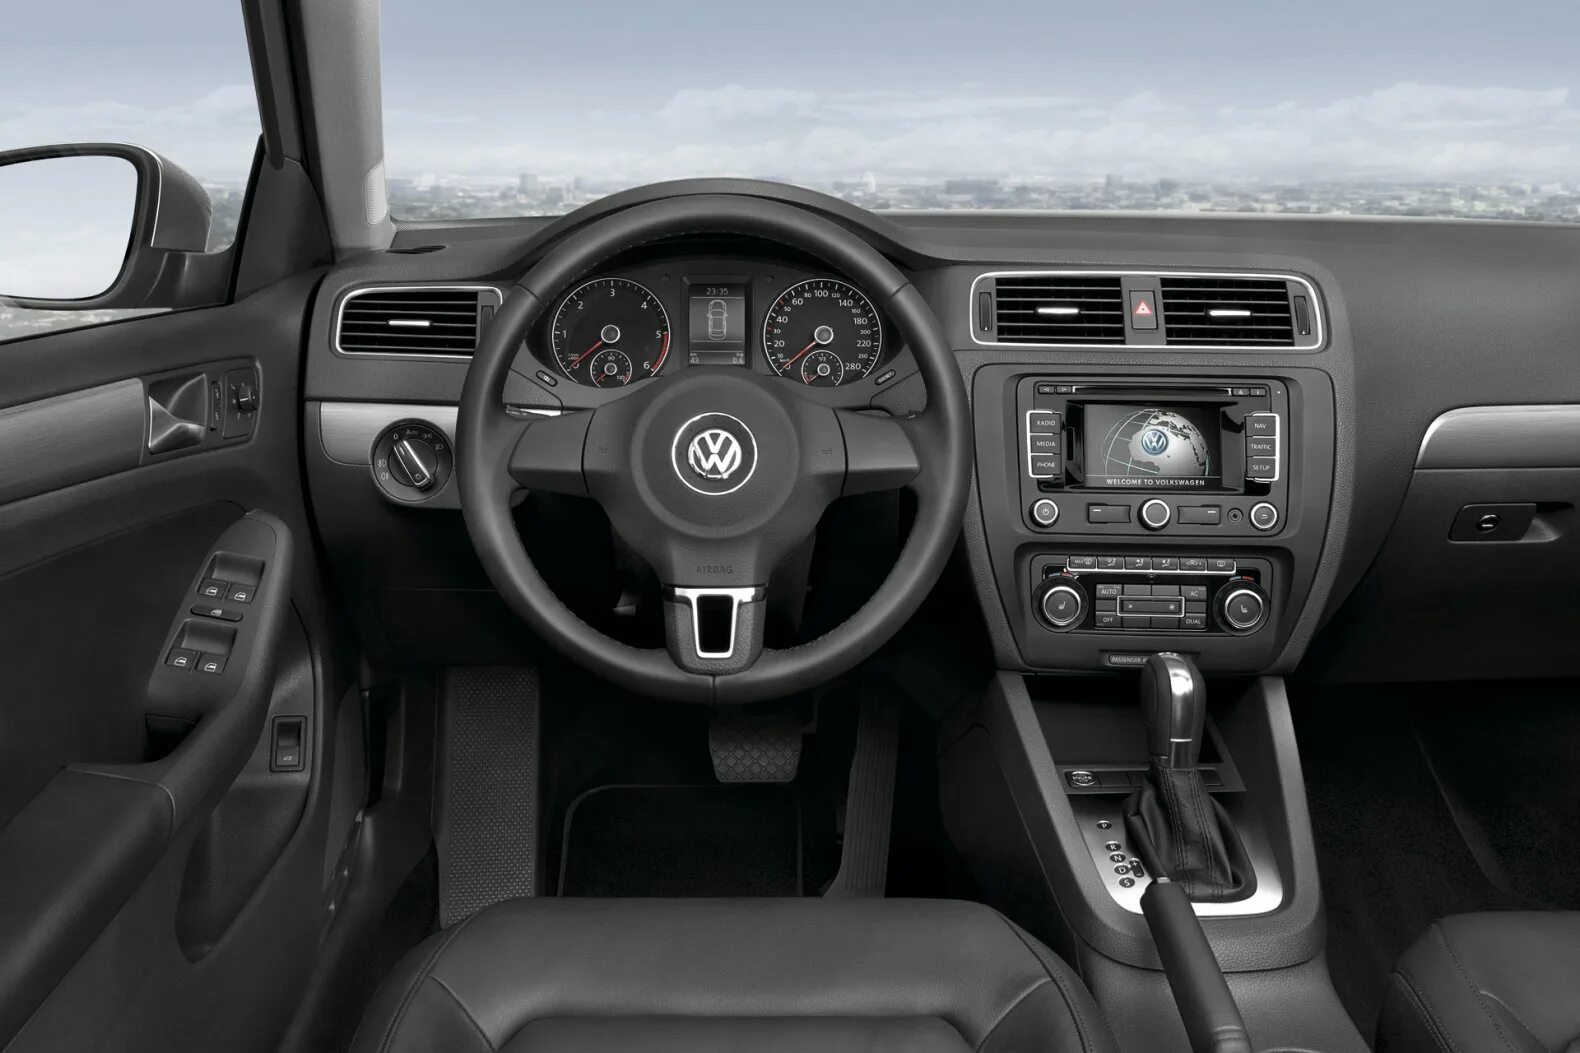 Фольксваген Джетта 5 салон. Volkswagen Jetta 2014 Interior. Фольксваген Джетта 1,6 салон. Фольксваген Джетта 2012 салон. Volkswagen jetta салон